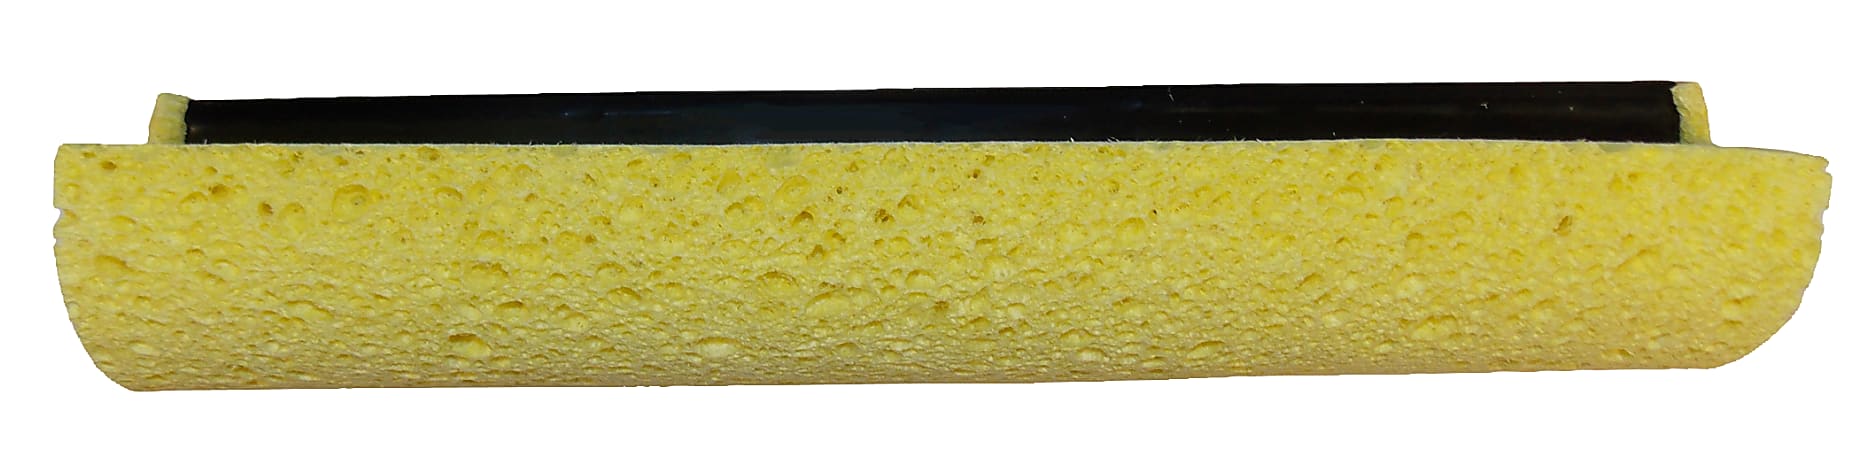 Wilen Roller Cellulose Sponge Refill, 12"